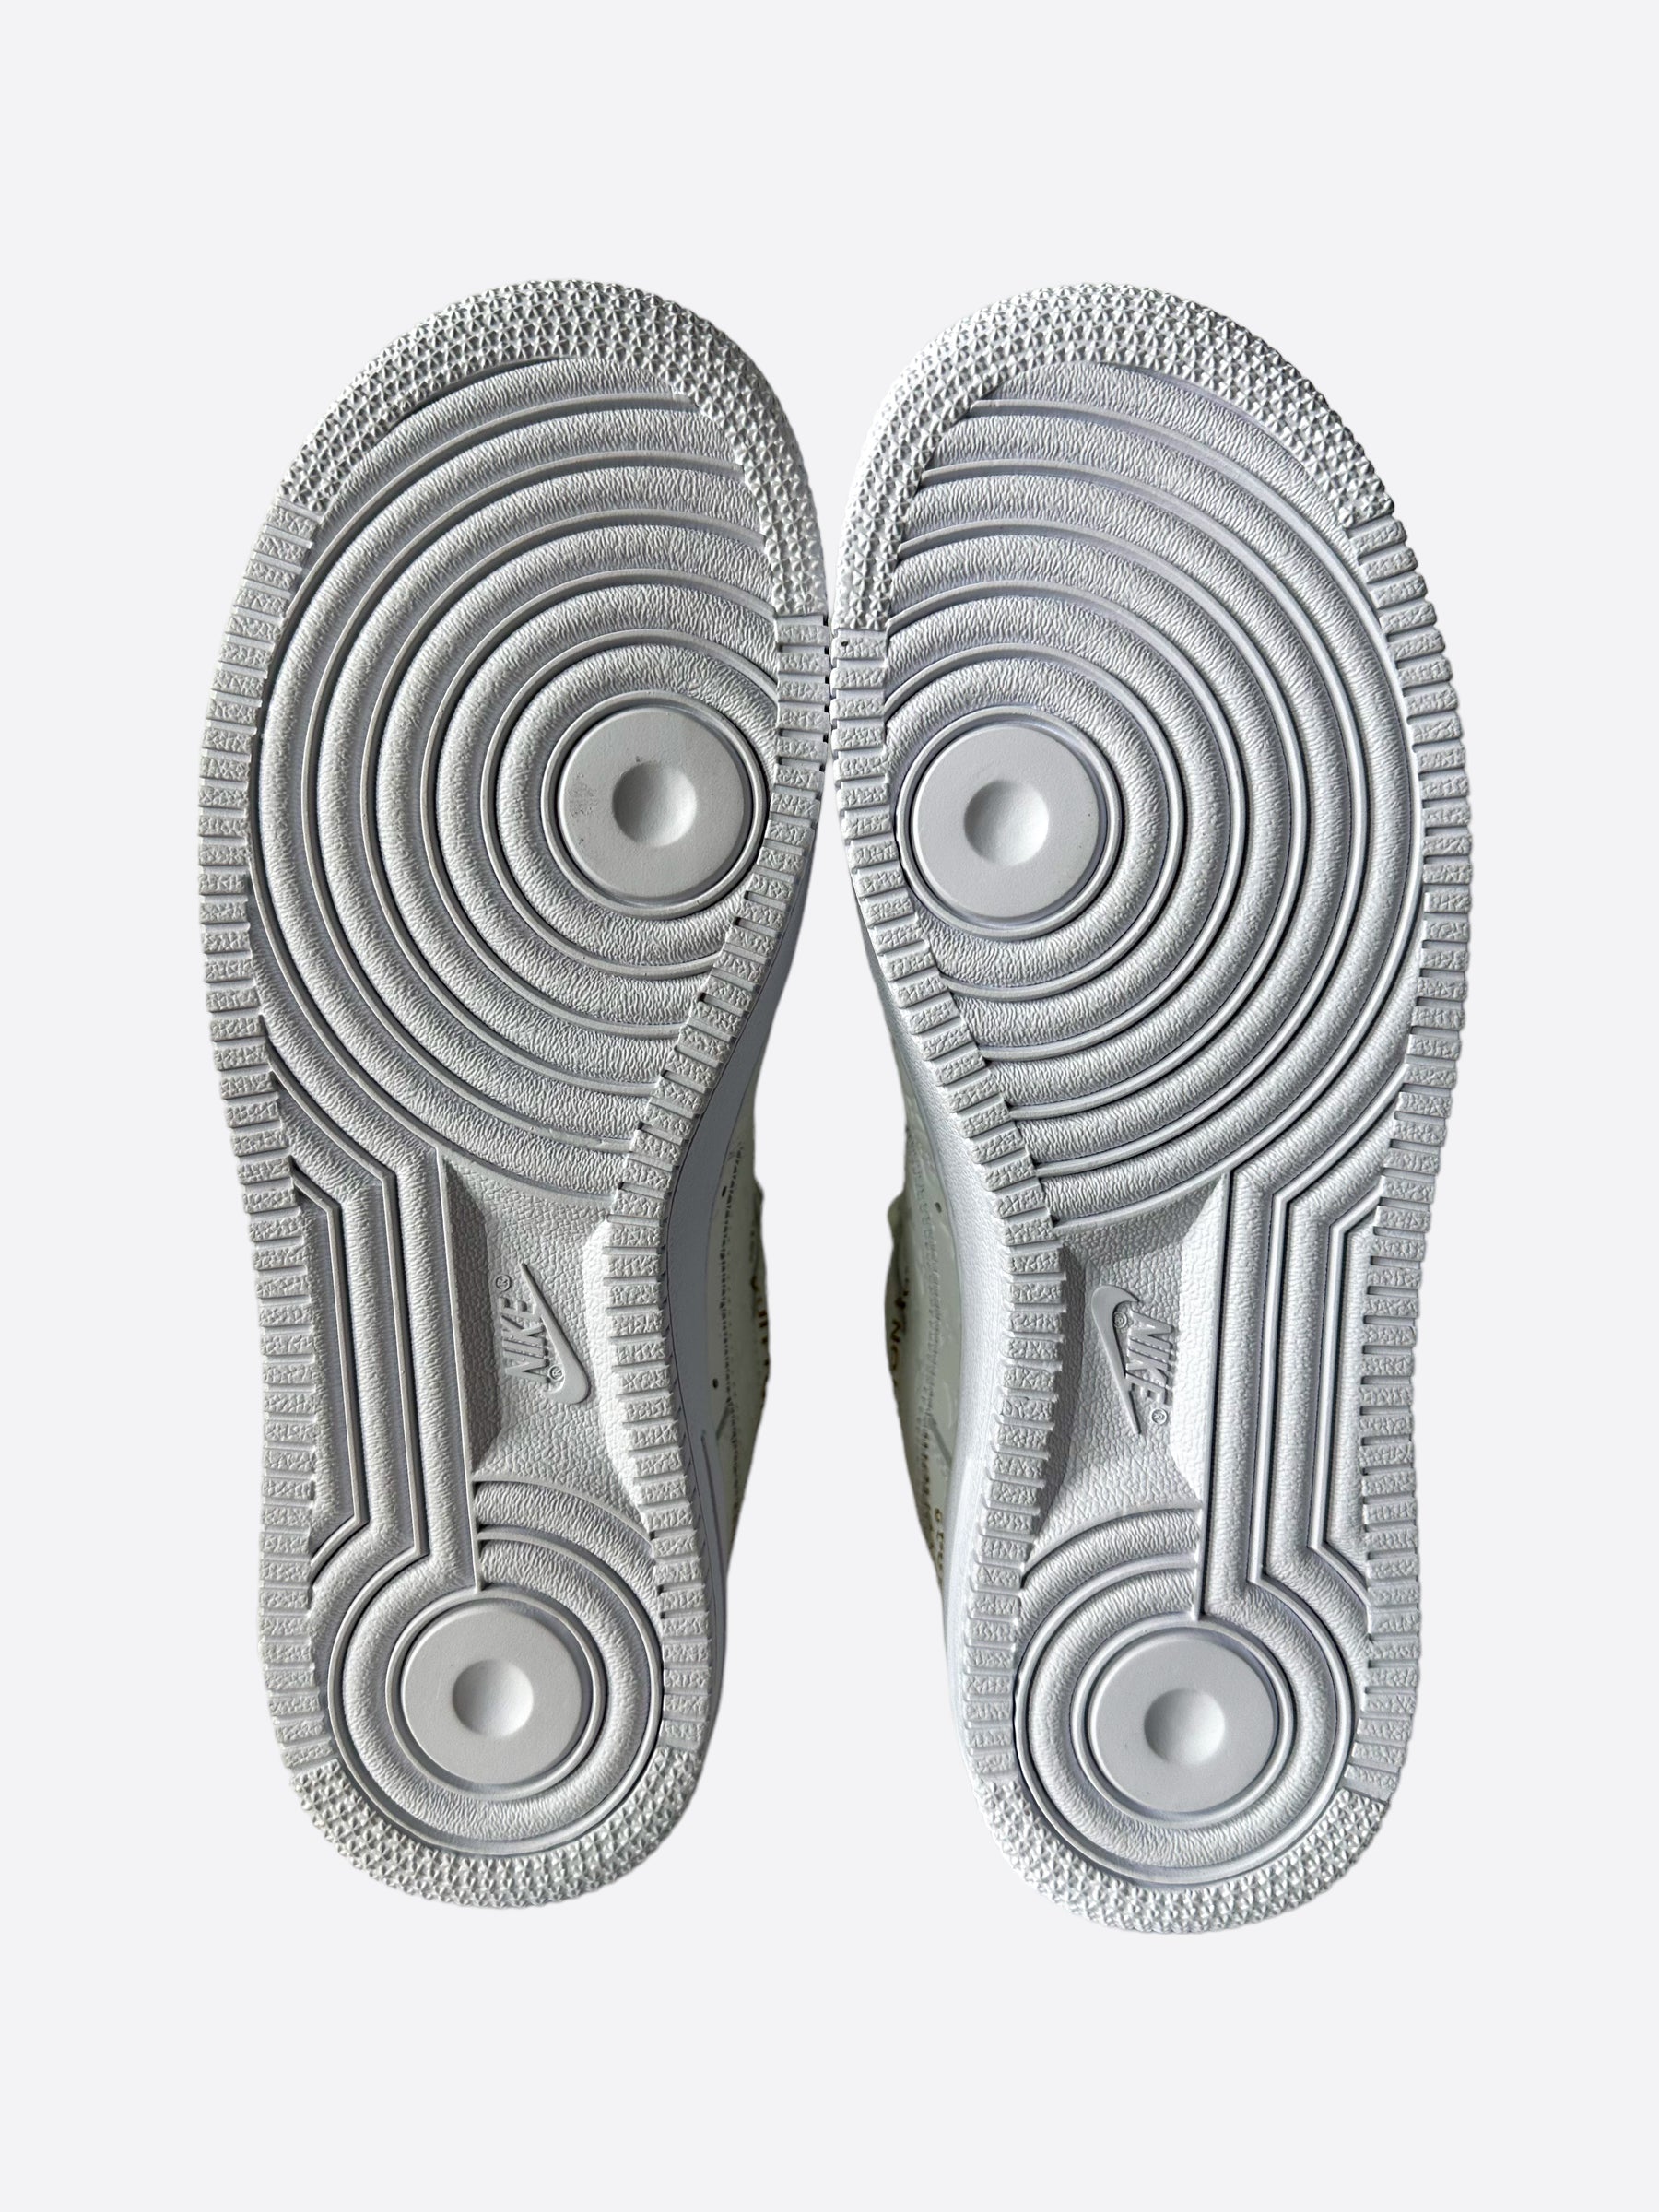 Nike Air Force 1 Low Louis Vuitton Black Metallic Silver